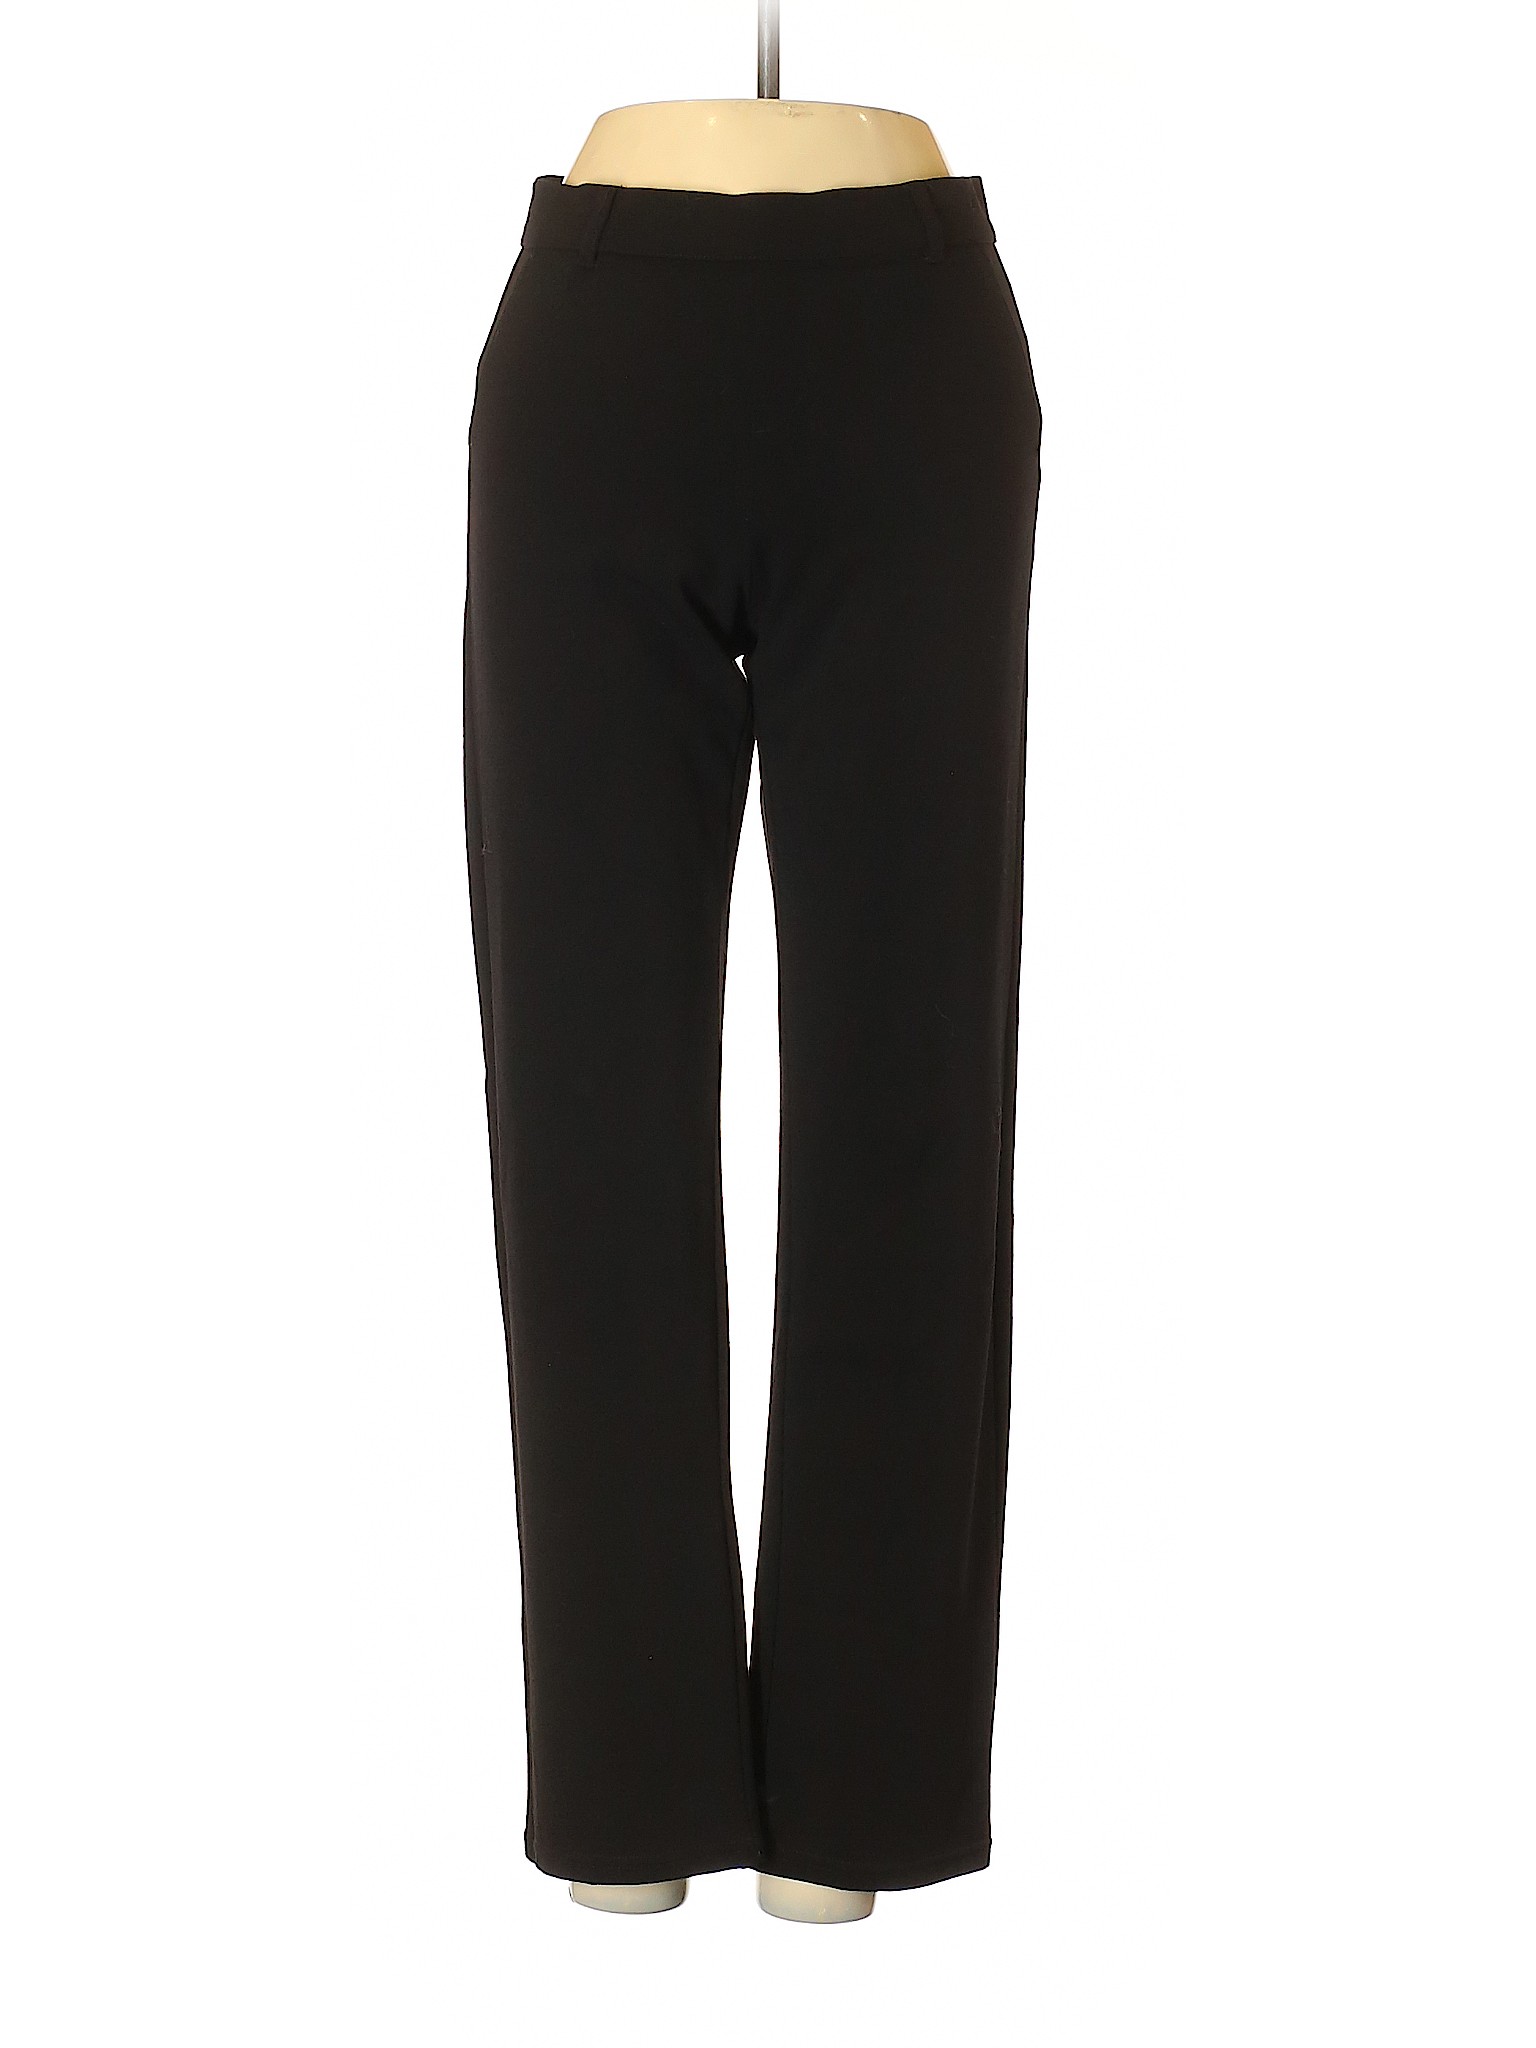 Hue Women Black Casual Pants S | eBay